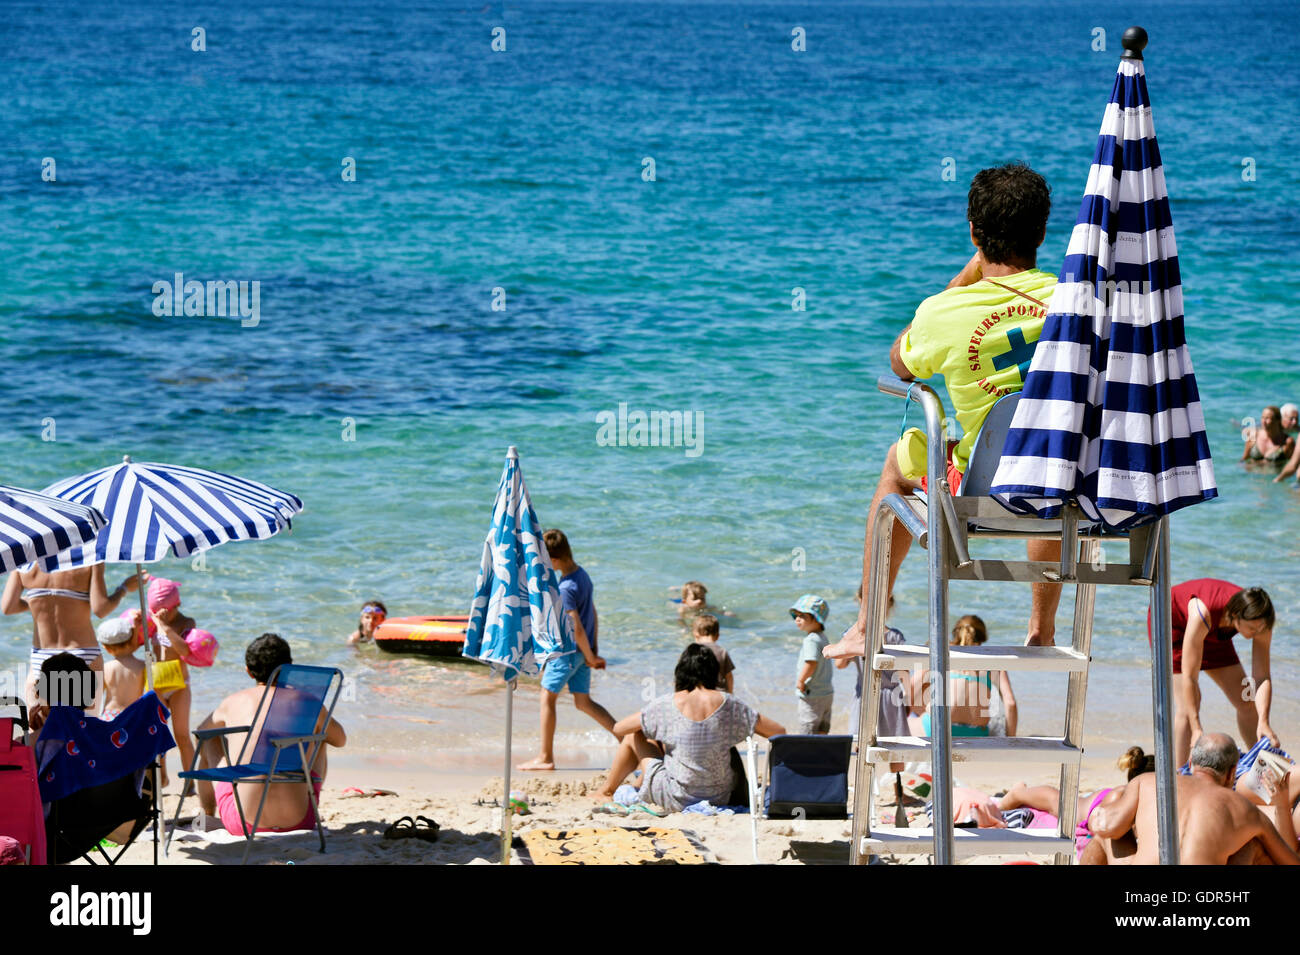 Sunny Beach on Antibes - Juan les Pins - French Riviéra - France Stock Photo